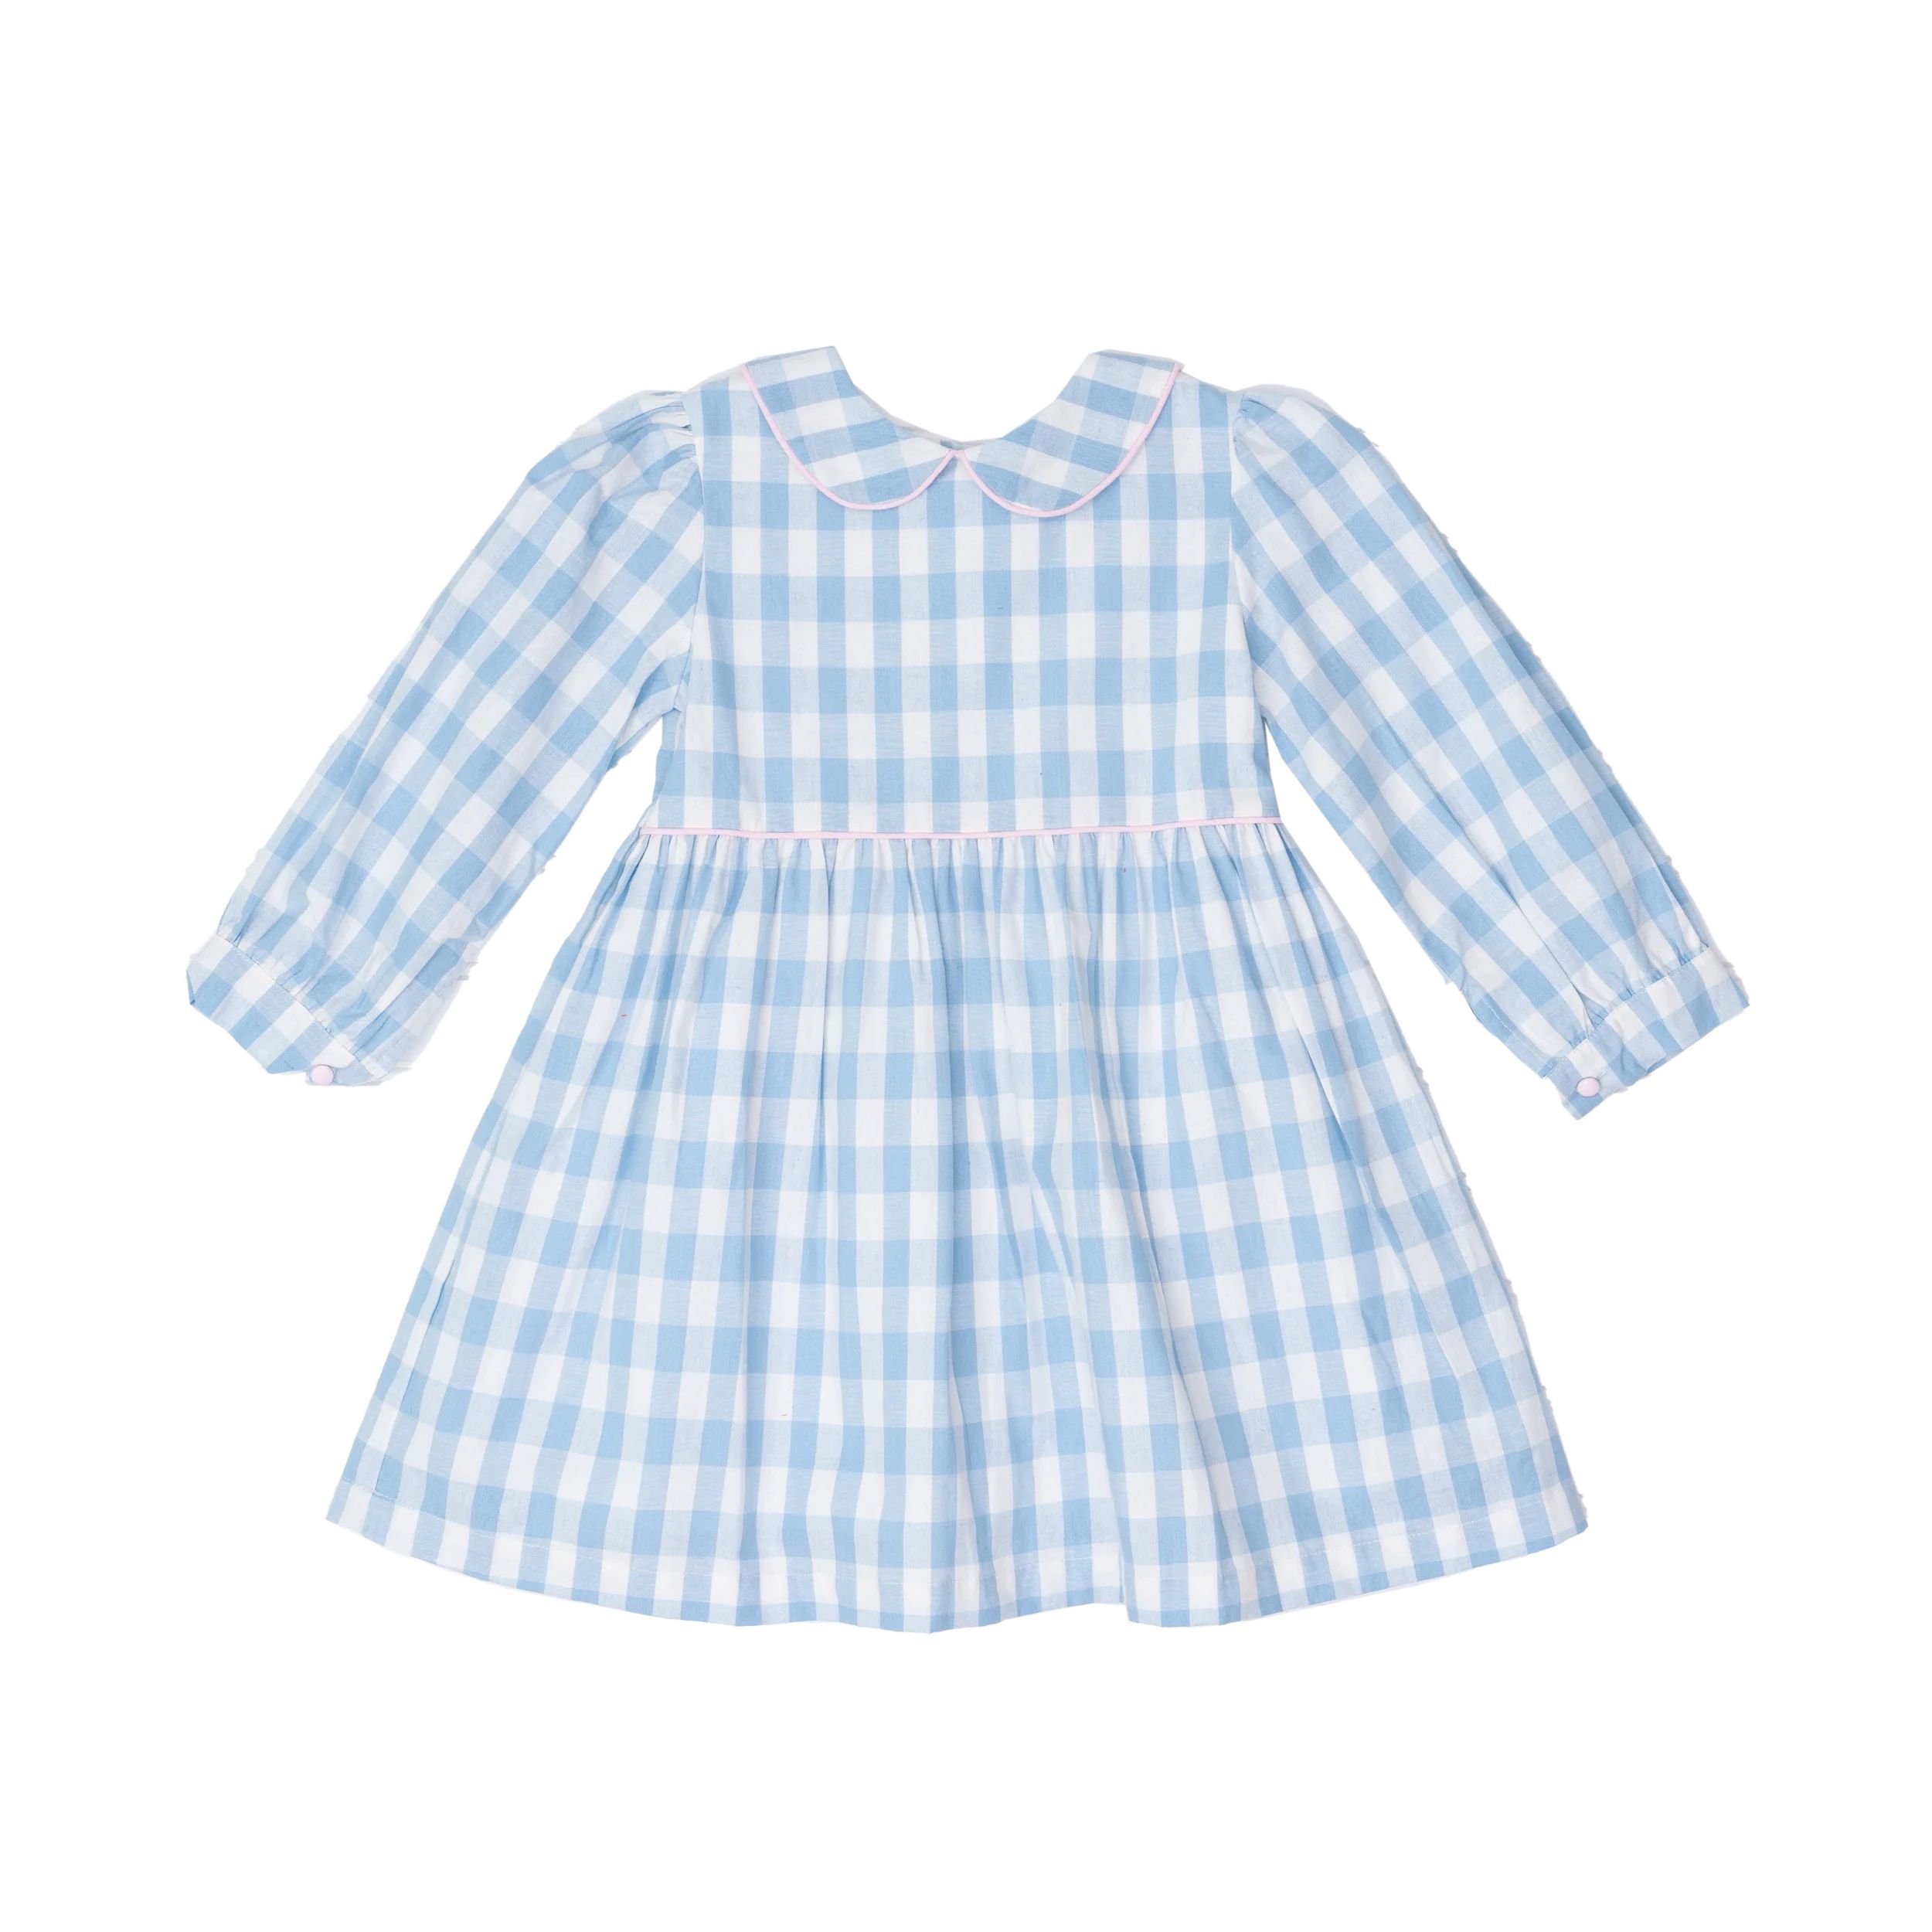 Lottie Blue Check Dress | The Oaks Apparel Company